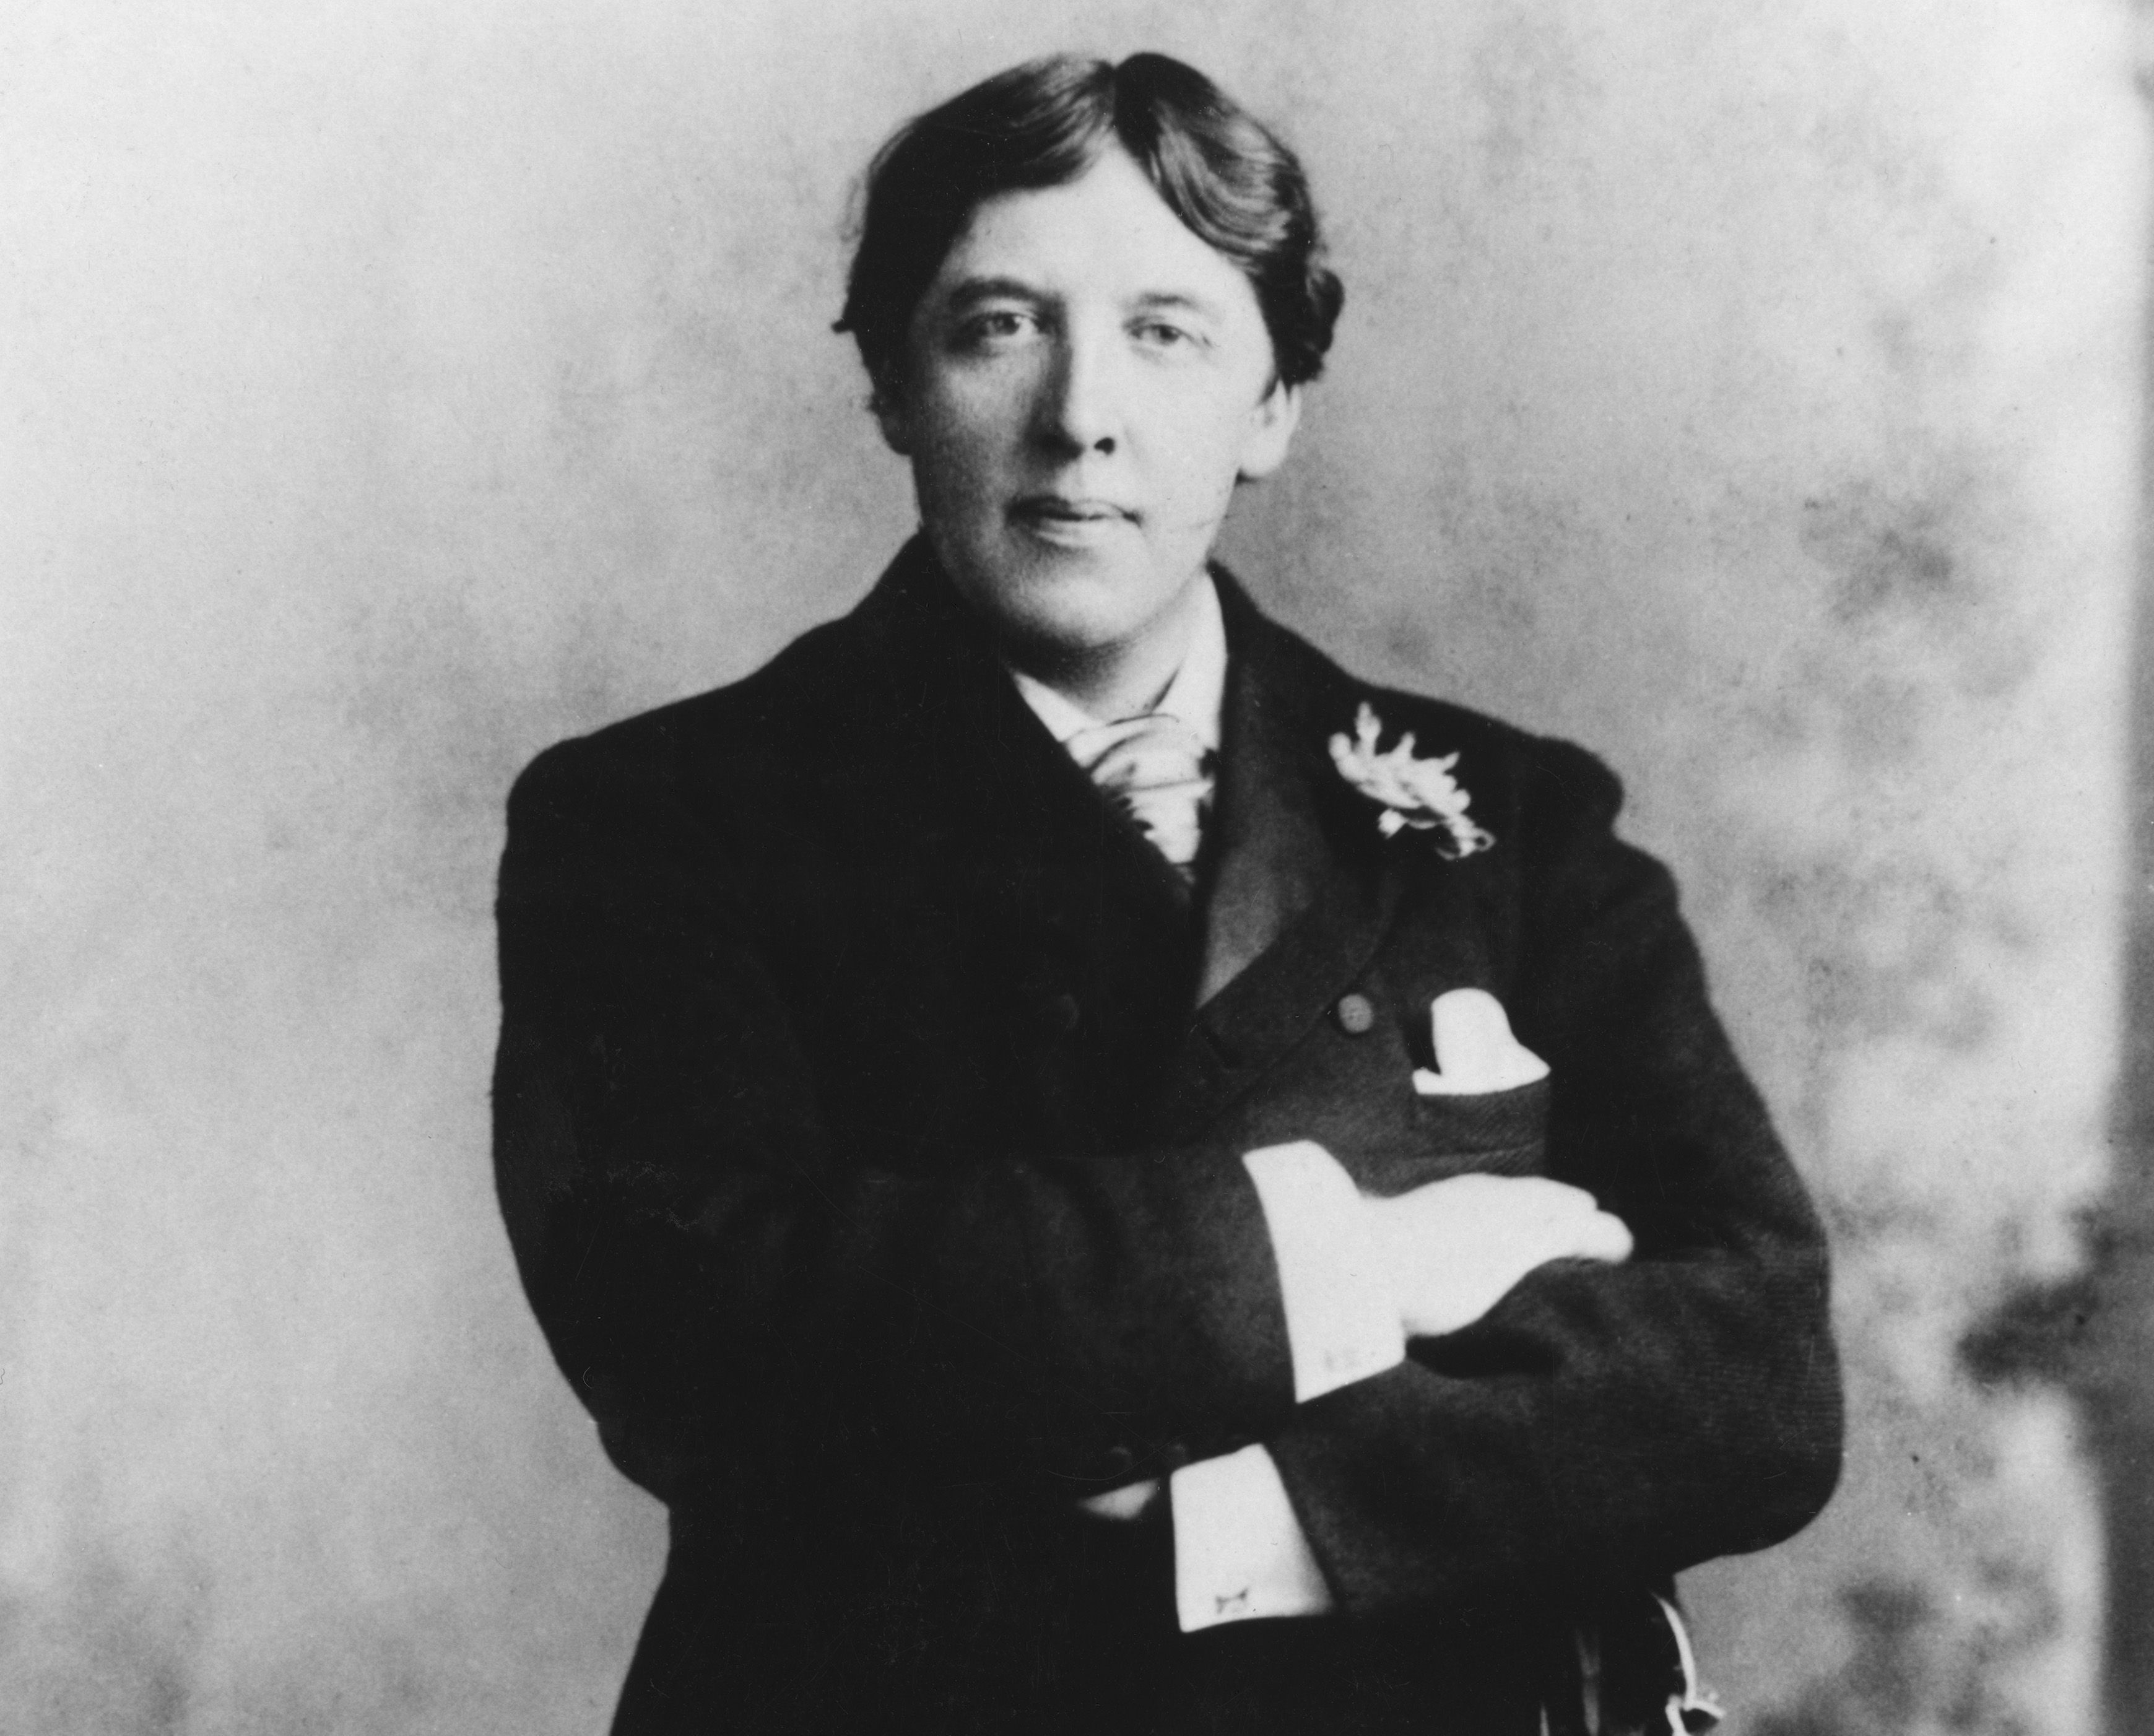 The life of Oscar Wilde